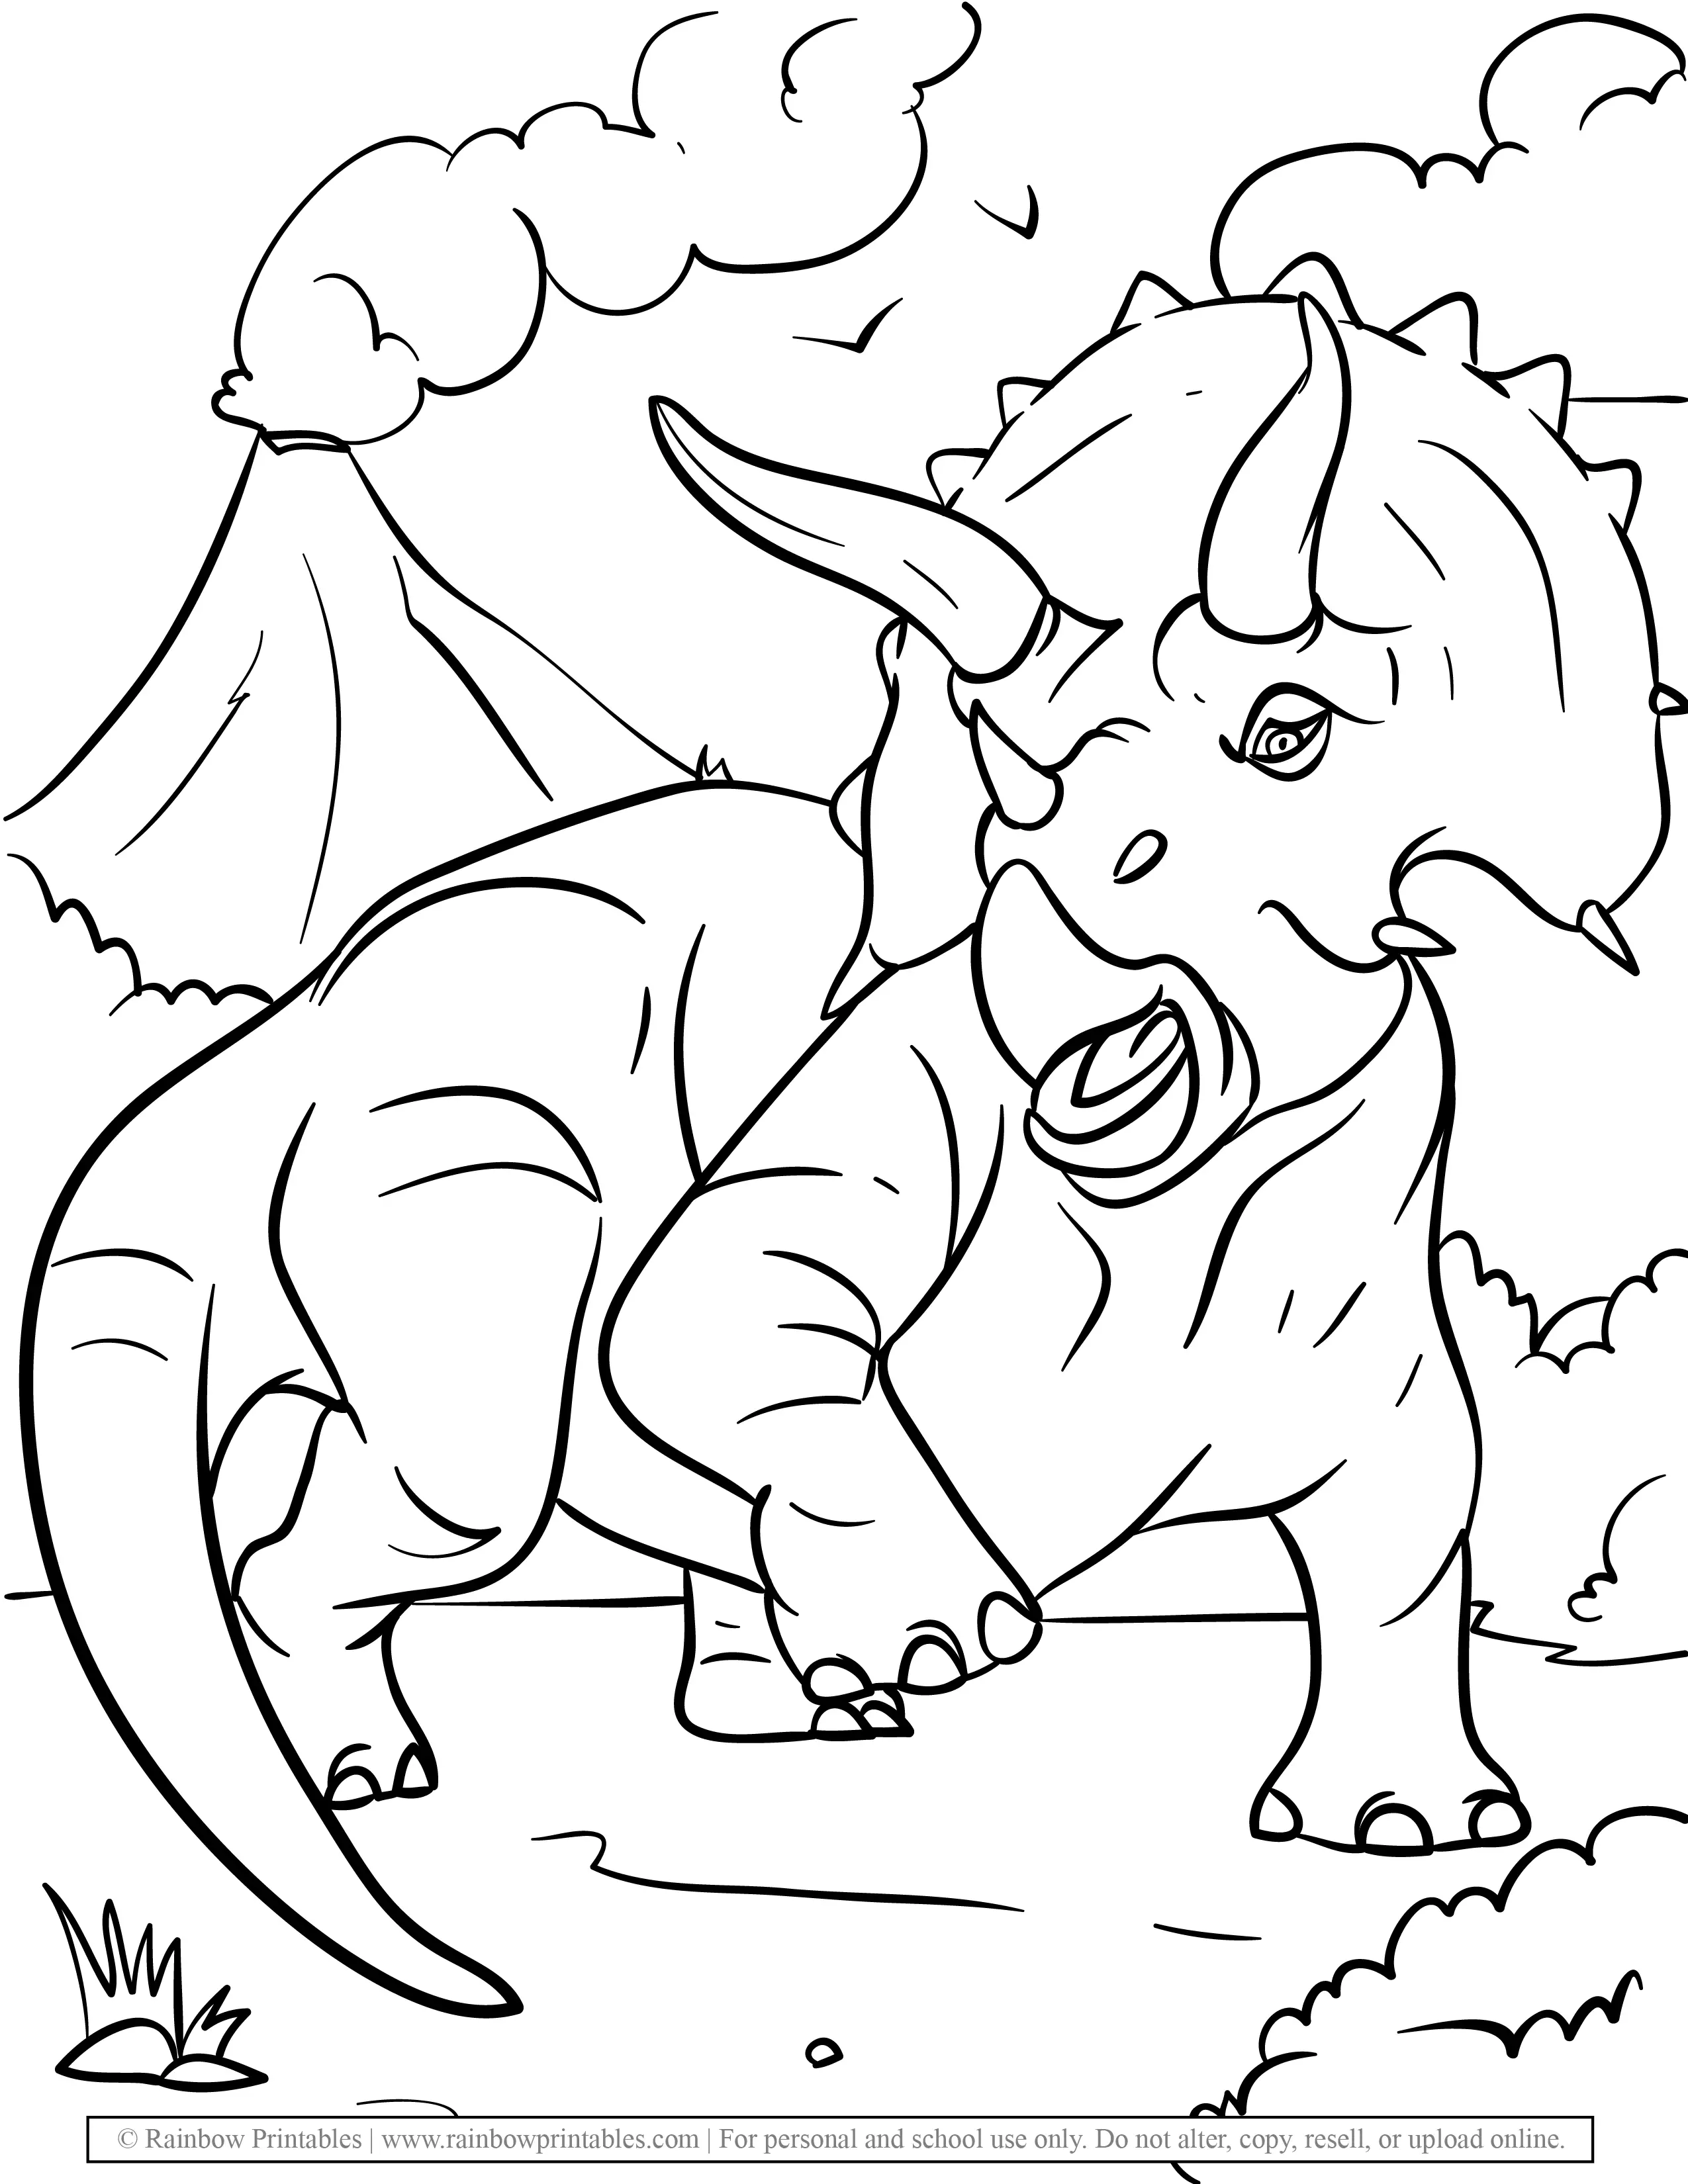 Ceratopsian Dinosaur Coloring Page   Rainbow Printables